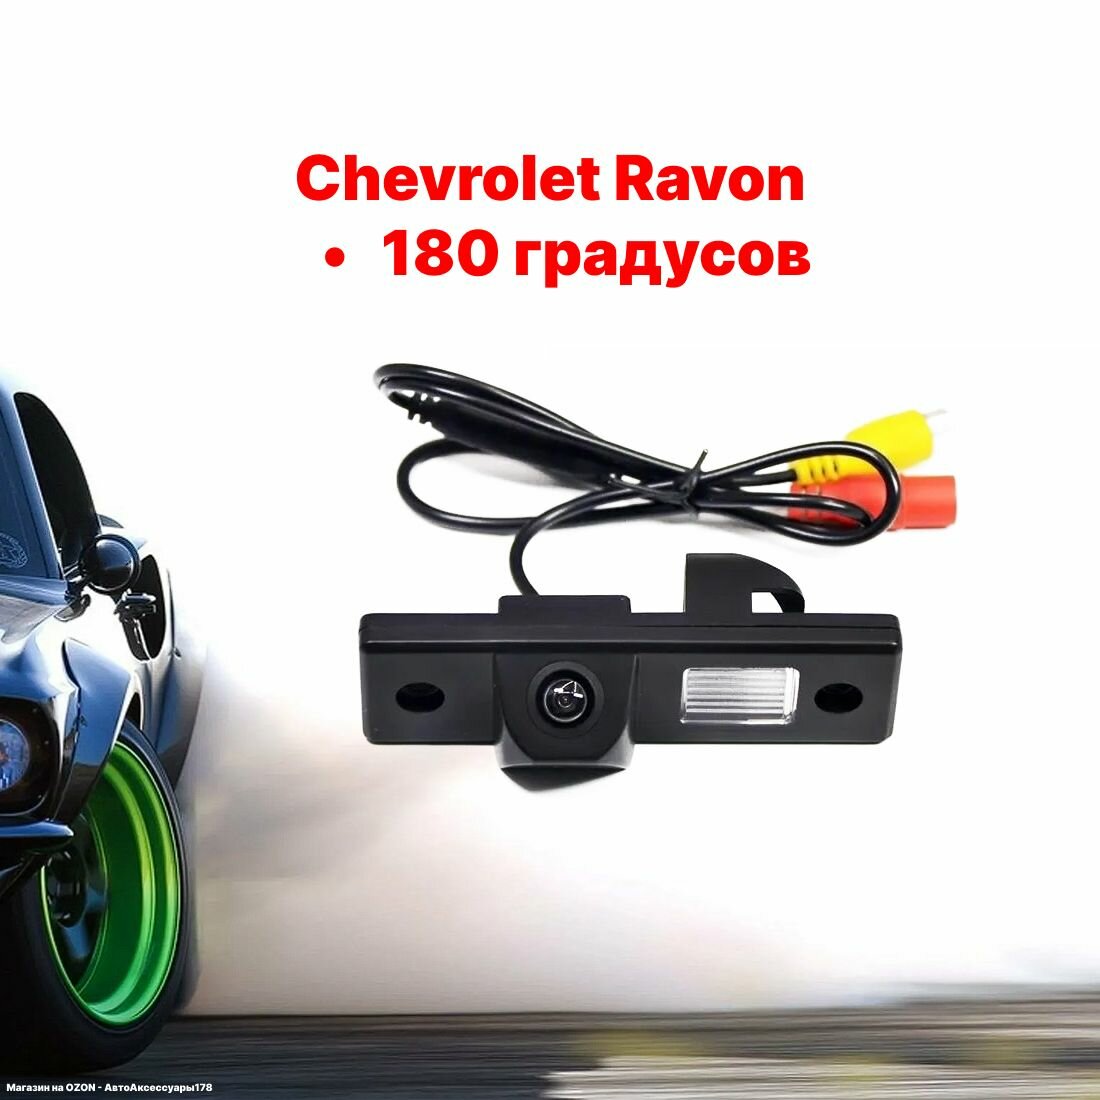 Камера заднего вида Шевроле Равон - 180 градусов (Chevrolet Ravon)